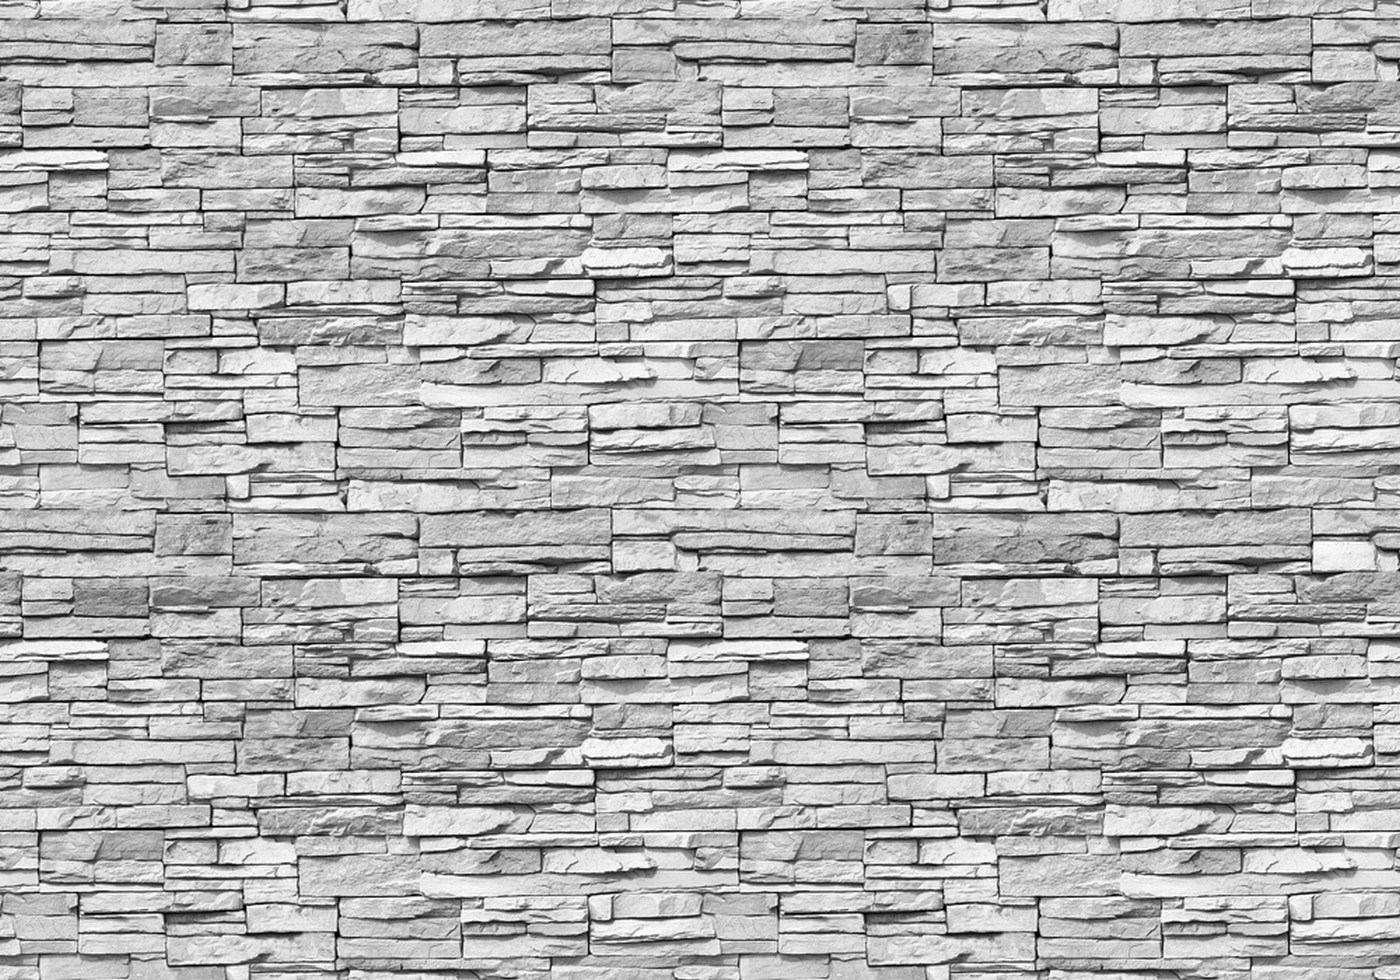 Vlies Fototapete 131 Noble Stone Wall Anthrazit Anreihbar Steinwand Tapete Steinoptik Stein Wand Wall Grau